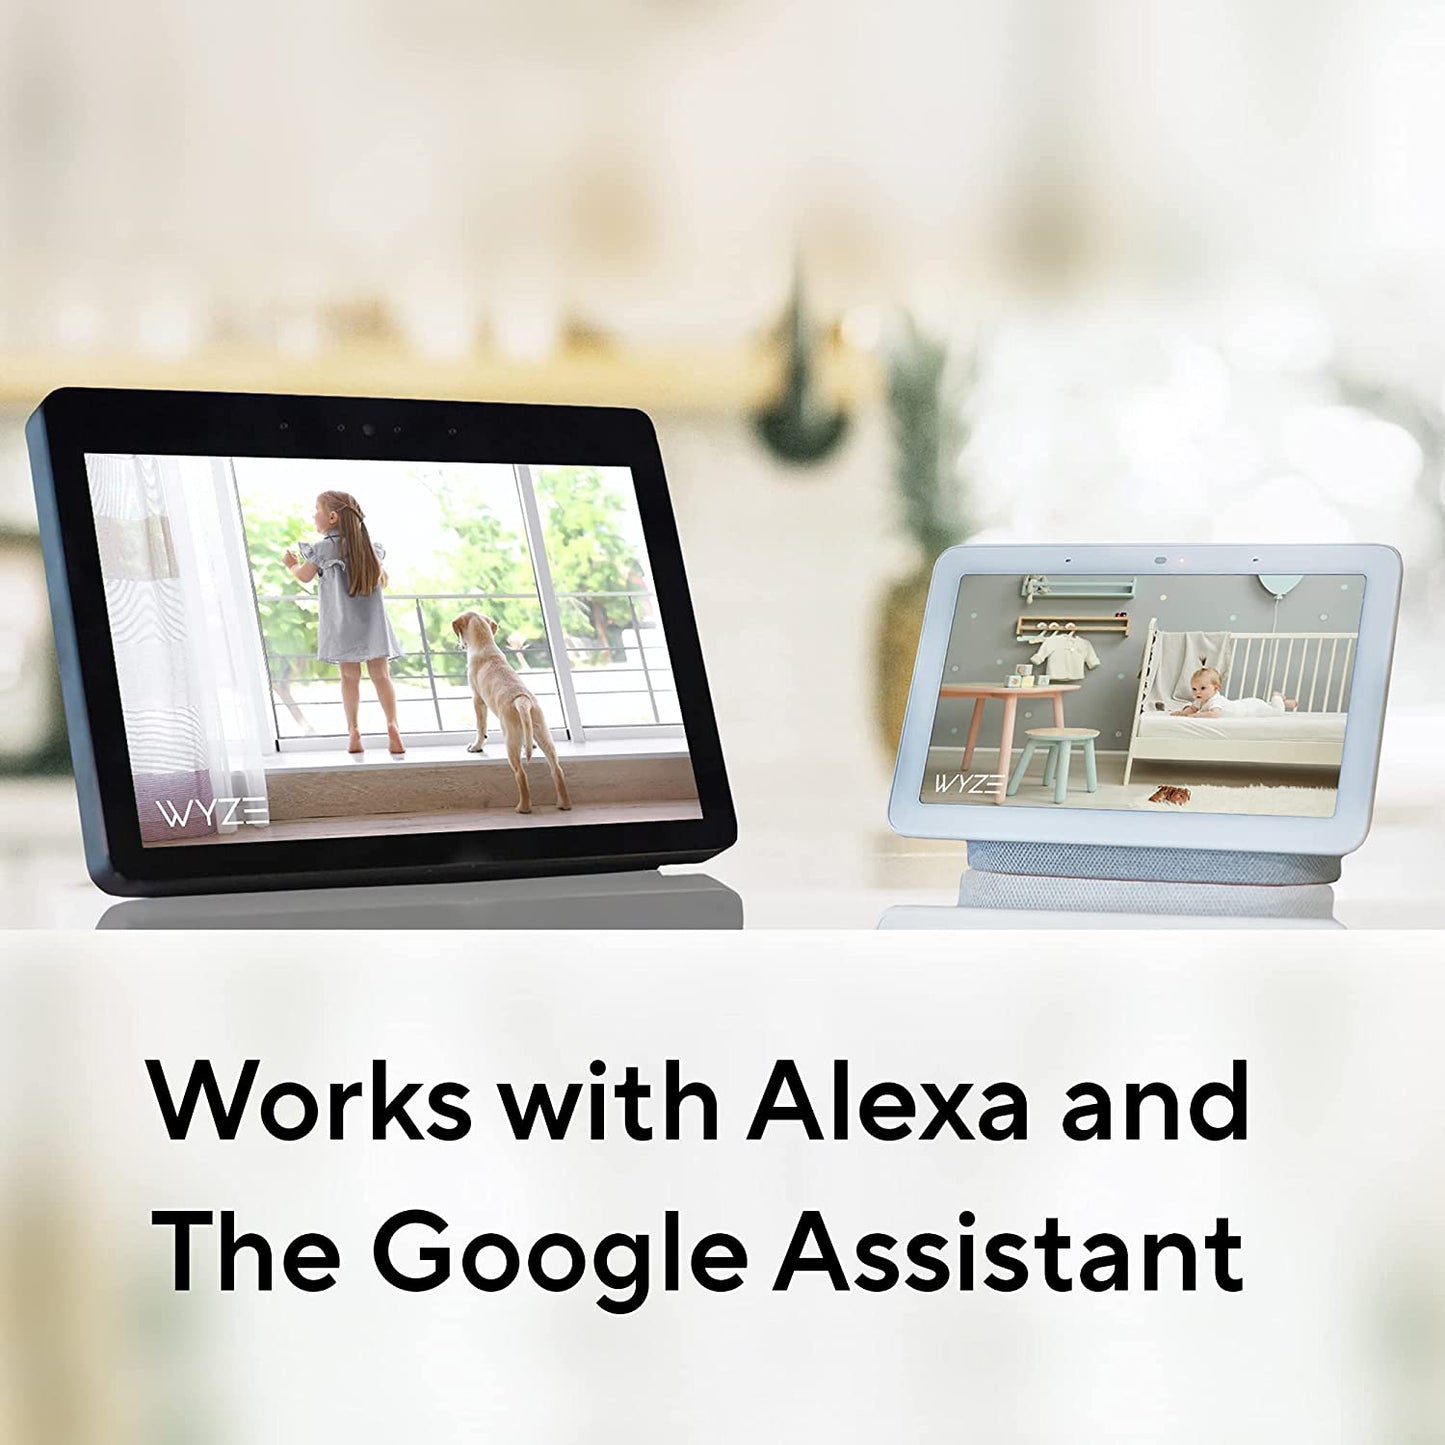 Image of Alexa screen device and Google screen device. Text overlay "Works with Alexa and Google Assistant."